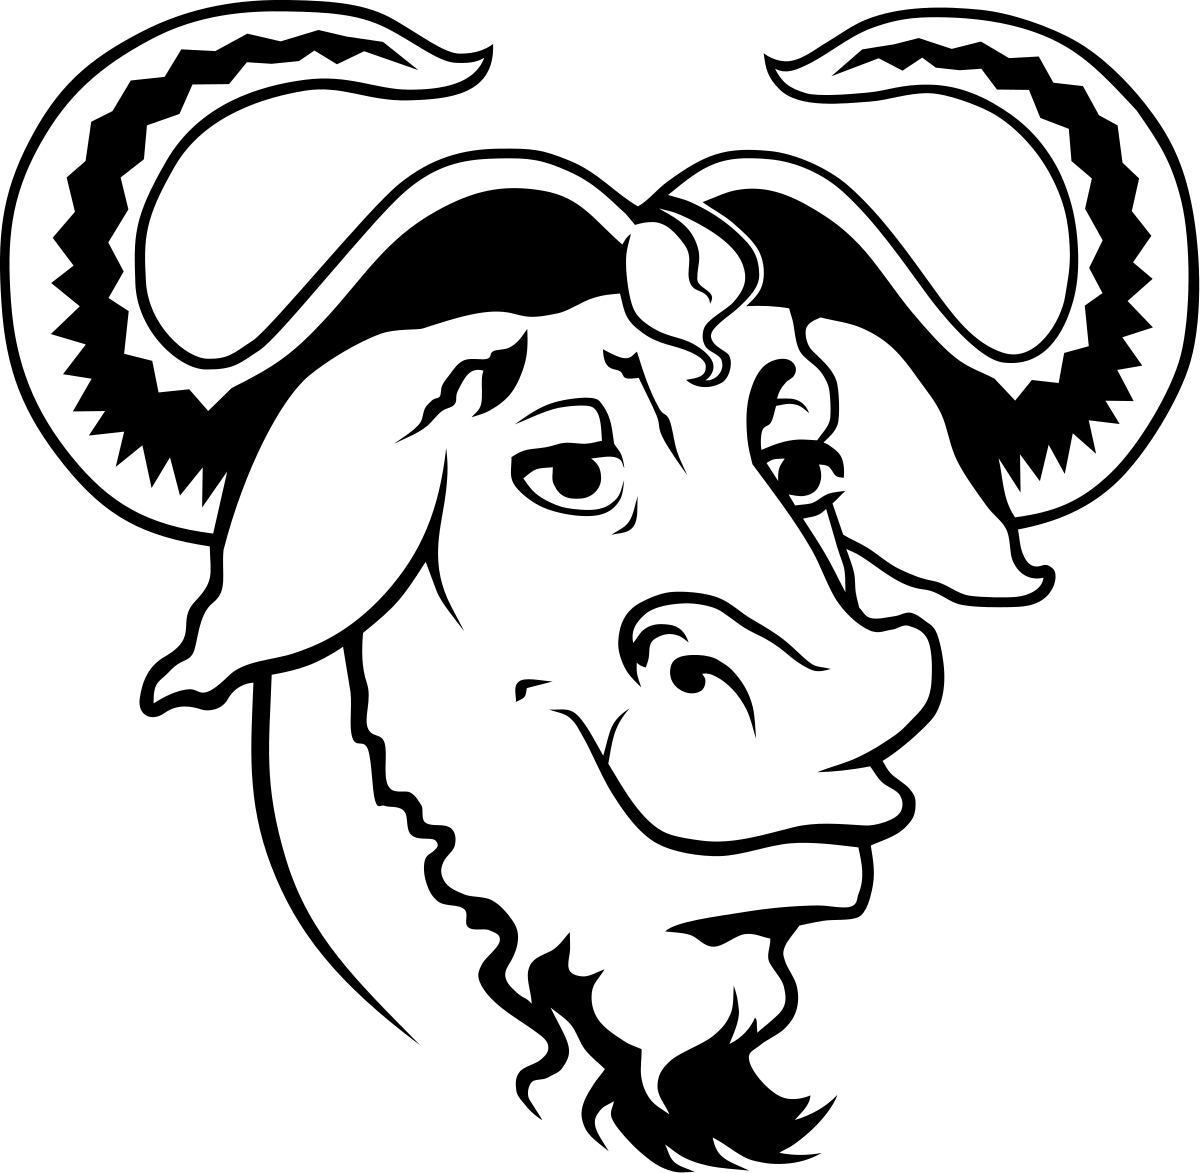 GNU-y-Linux-lavariega